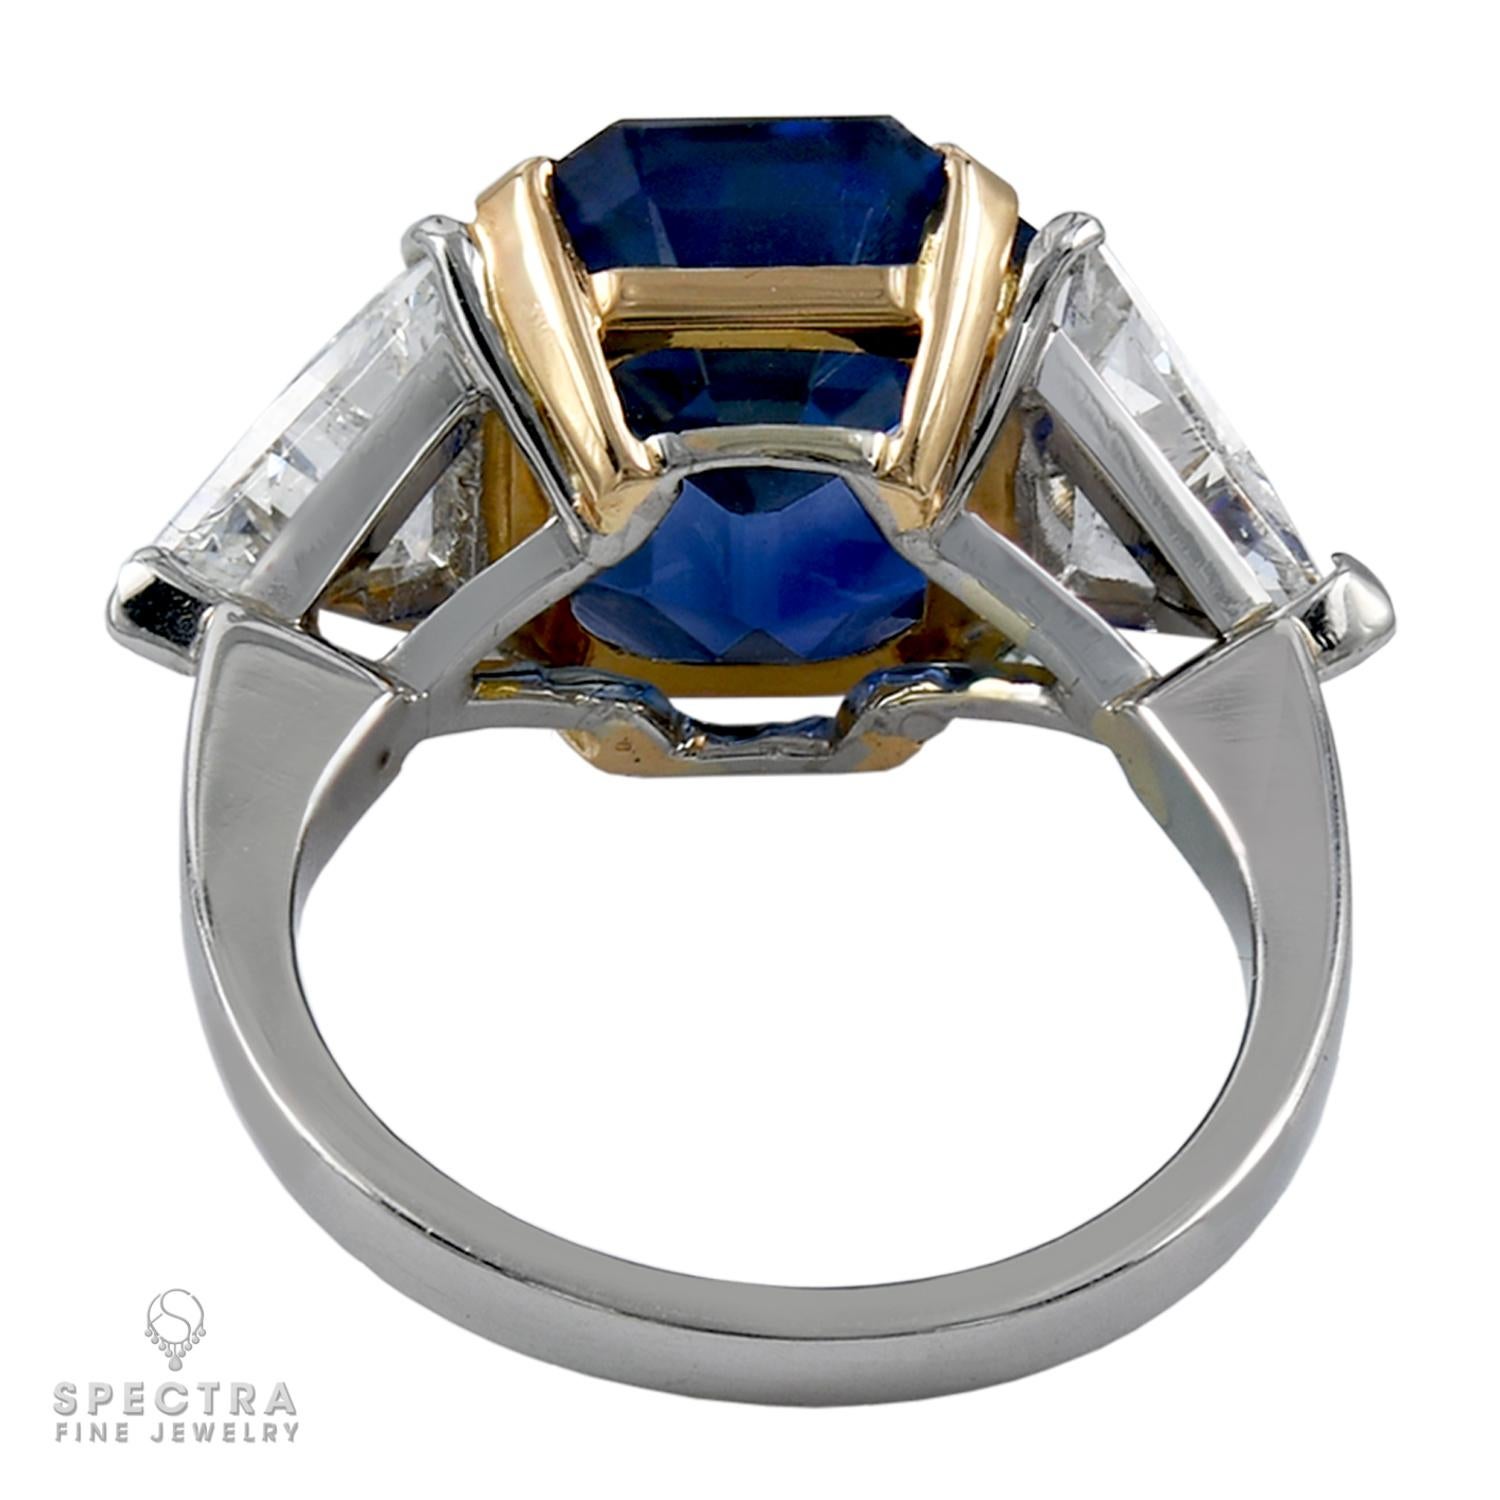 Emerald Cut Spectra Fine Jewelry, AGL Certified 7.80 Carat Burma Sapphire Diamond Ring For Sale